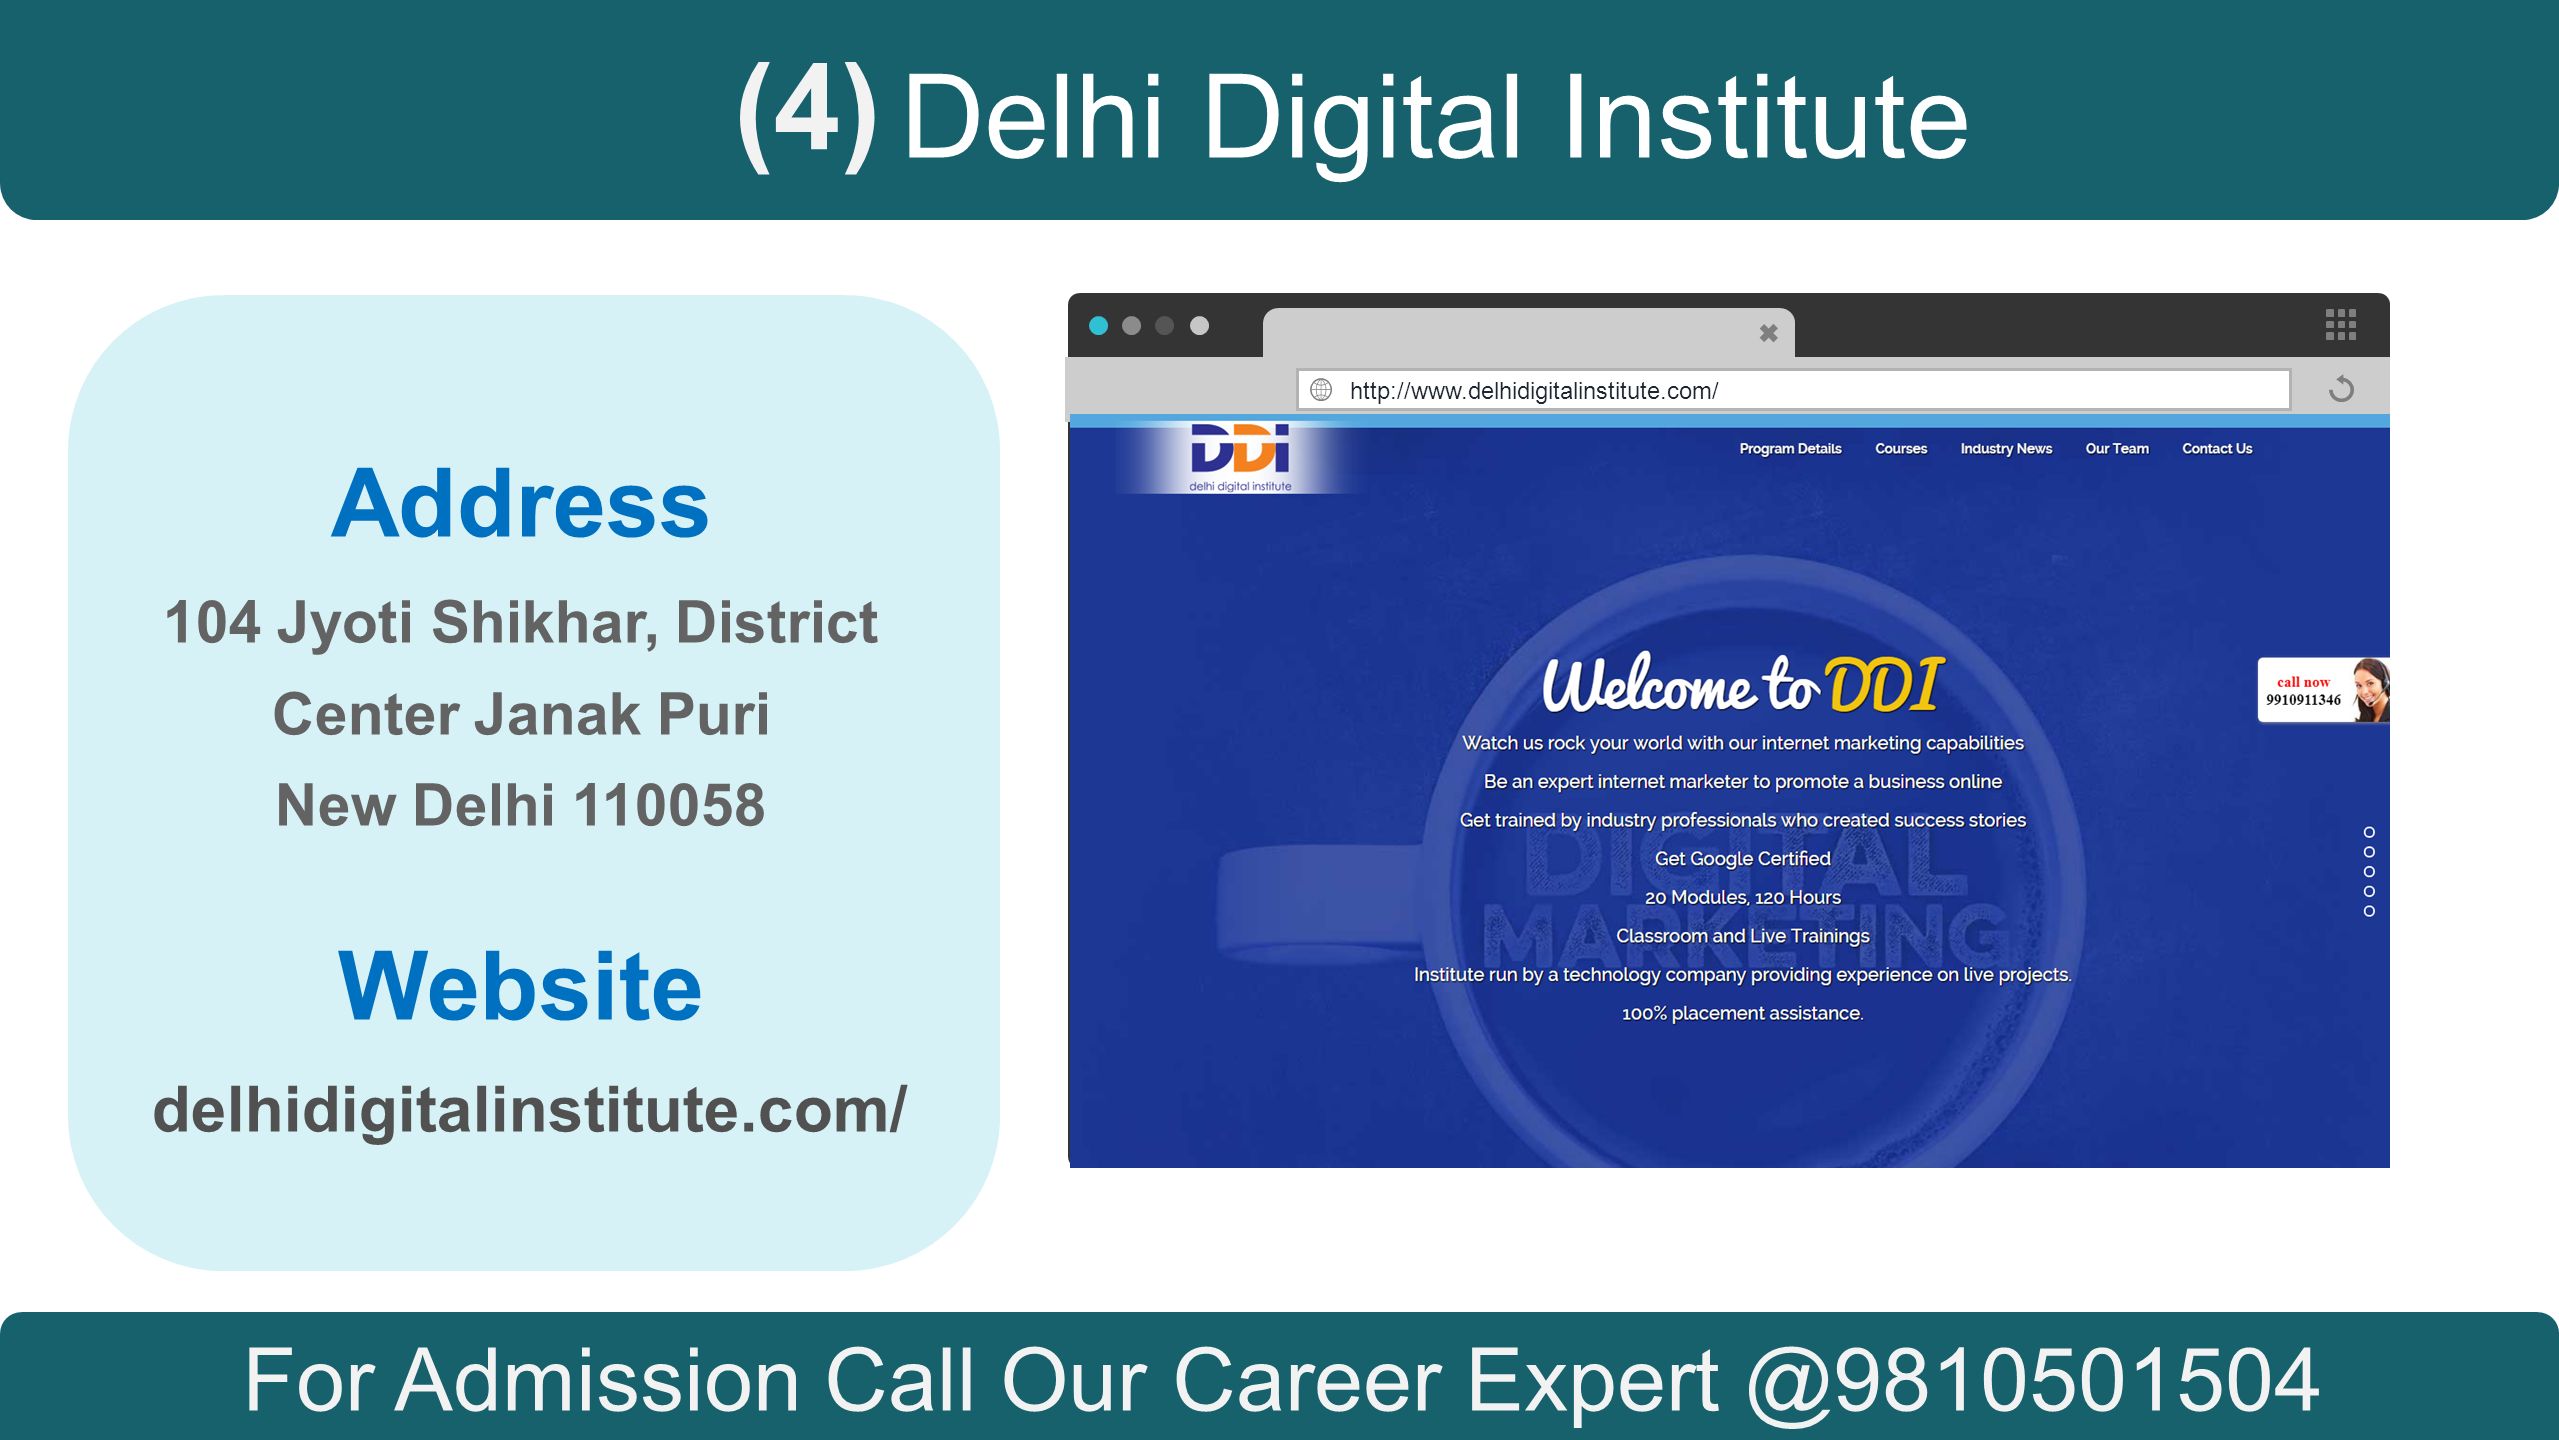 7 Address 104 Jyoti Shikhar, District Center Janak Puri New Delhi Website delhidigitalinstitute.com/ Delhi Digital Institute (4) For Admission Call Our Career